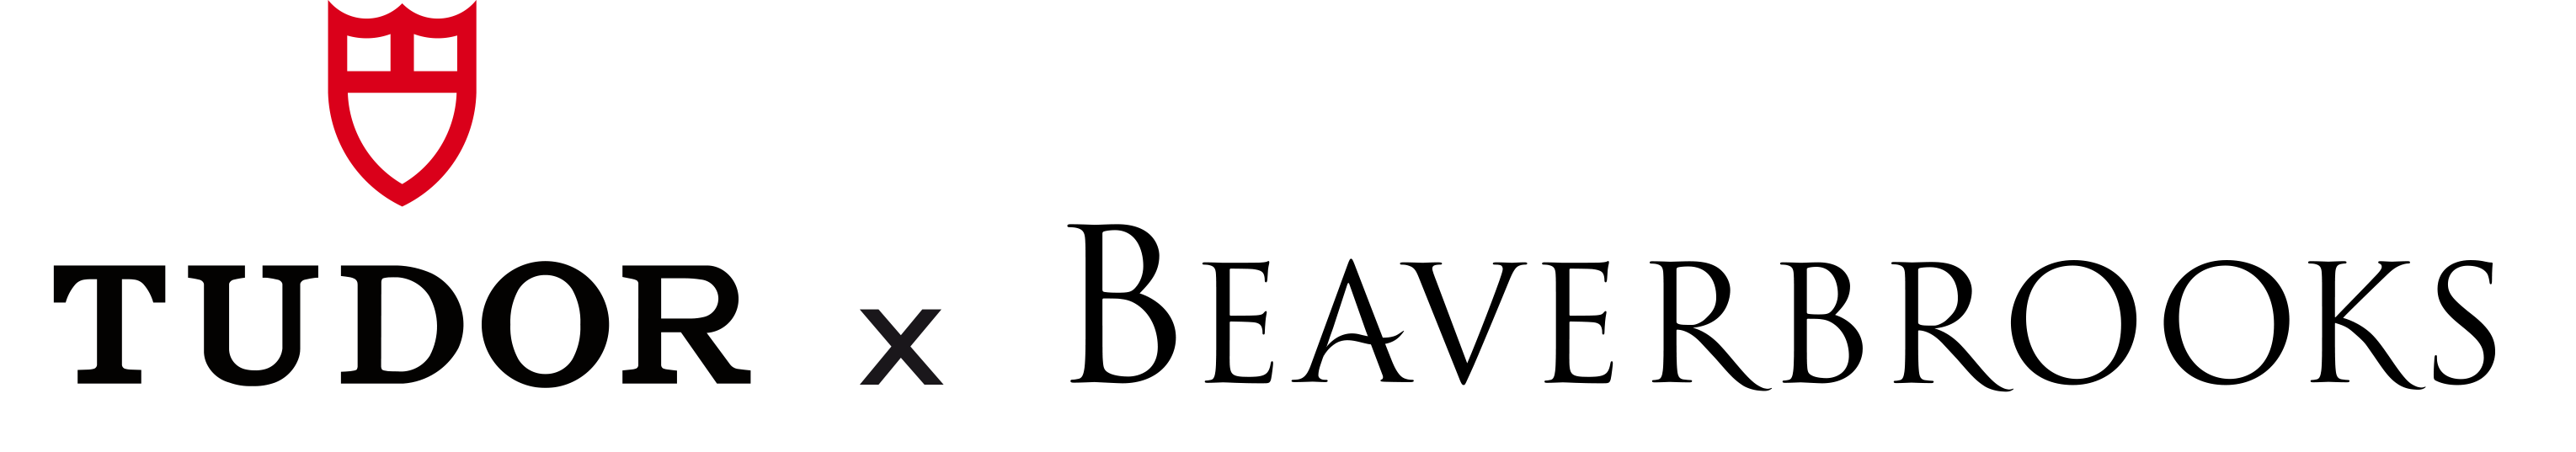 Tudor x Beaverbrooks Logo